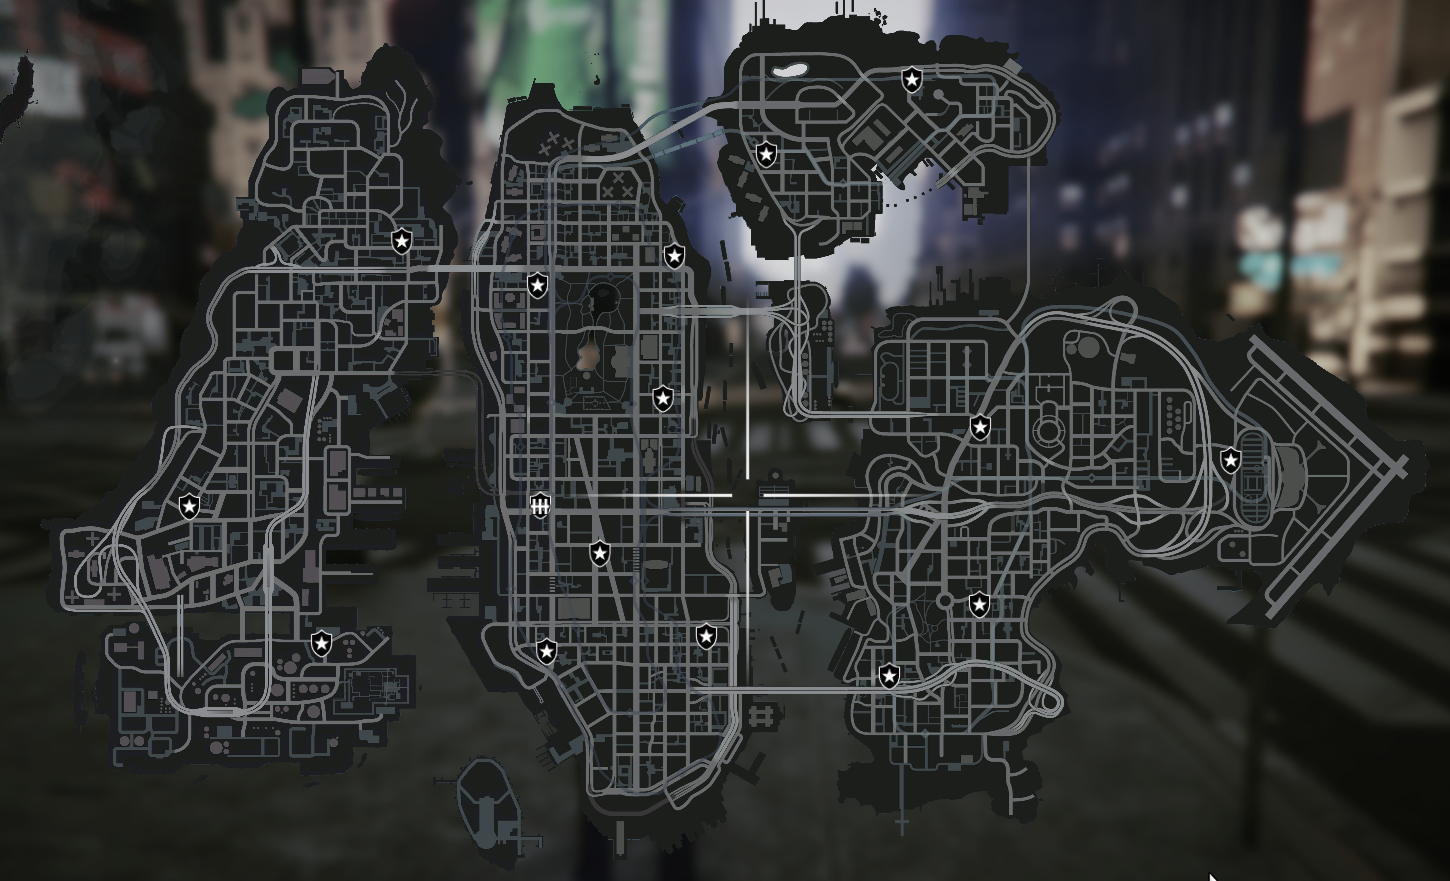 GTA 3's Liberty City Map in GTA 5 